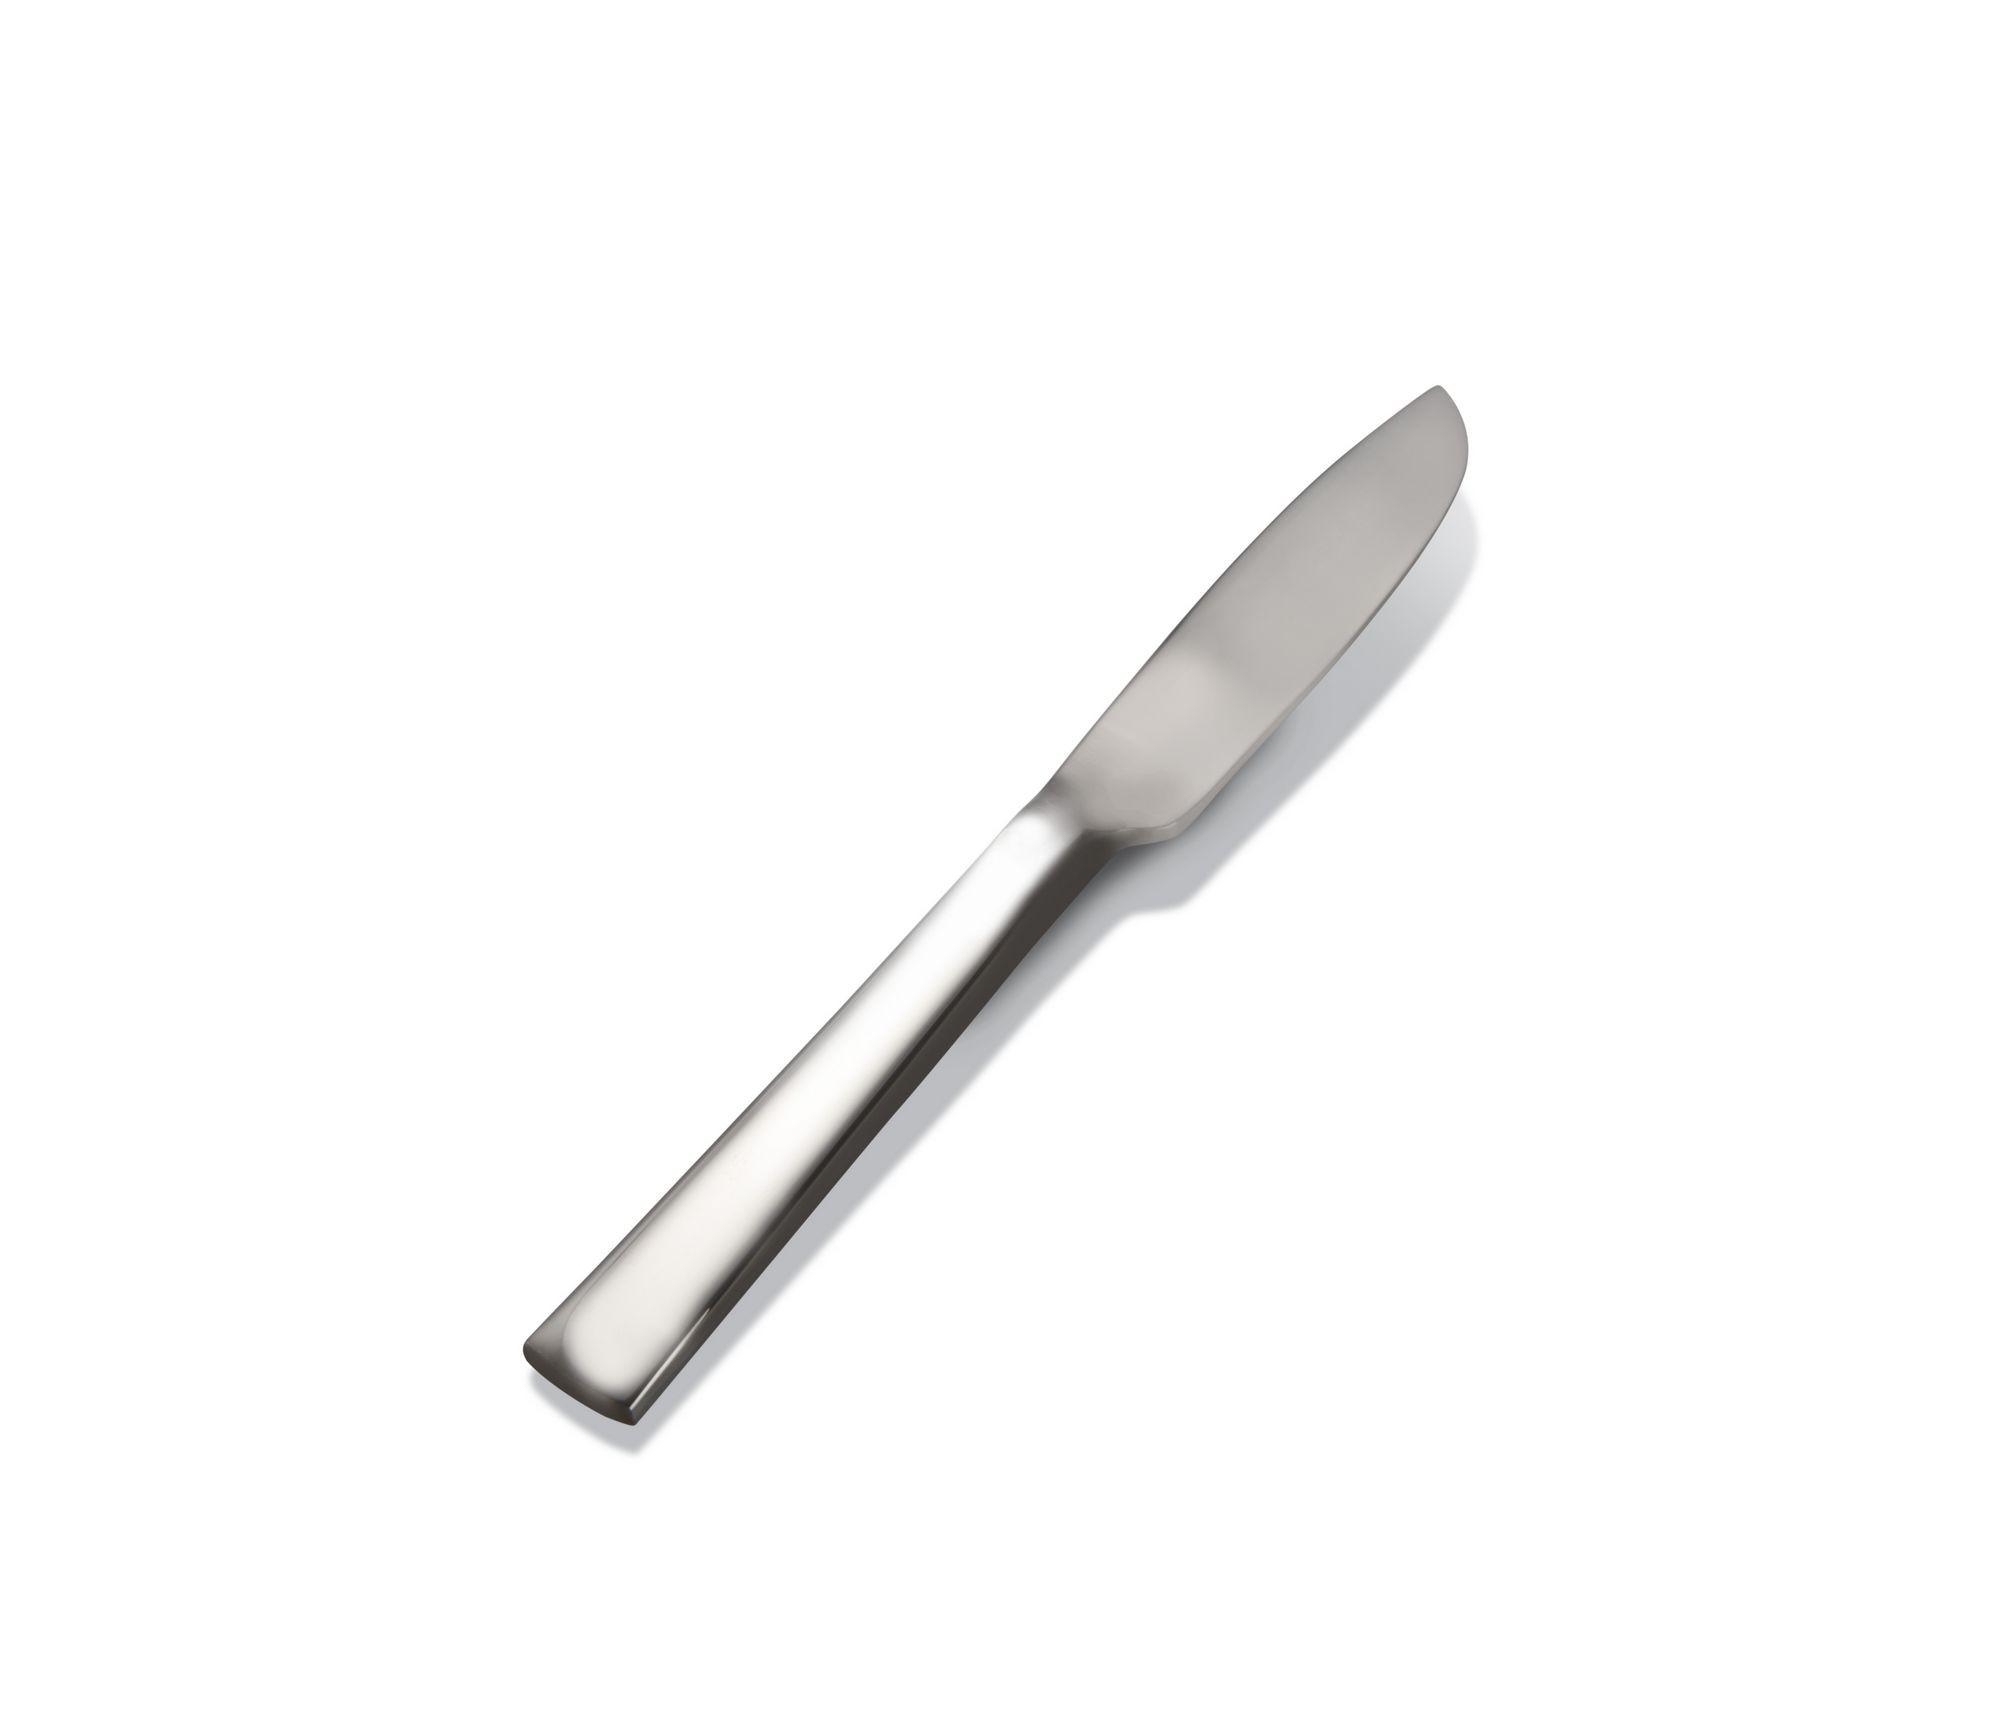 Bon Chef S3713 Roman 18/8 Stainless Steel Butter Knife